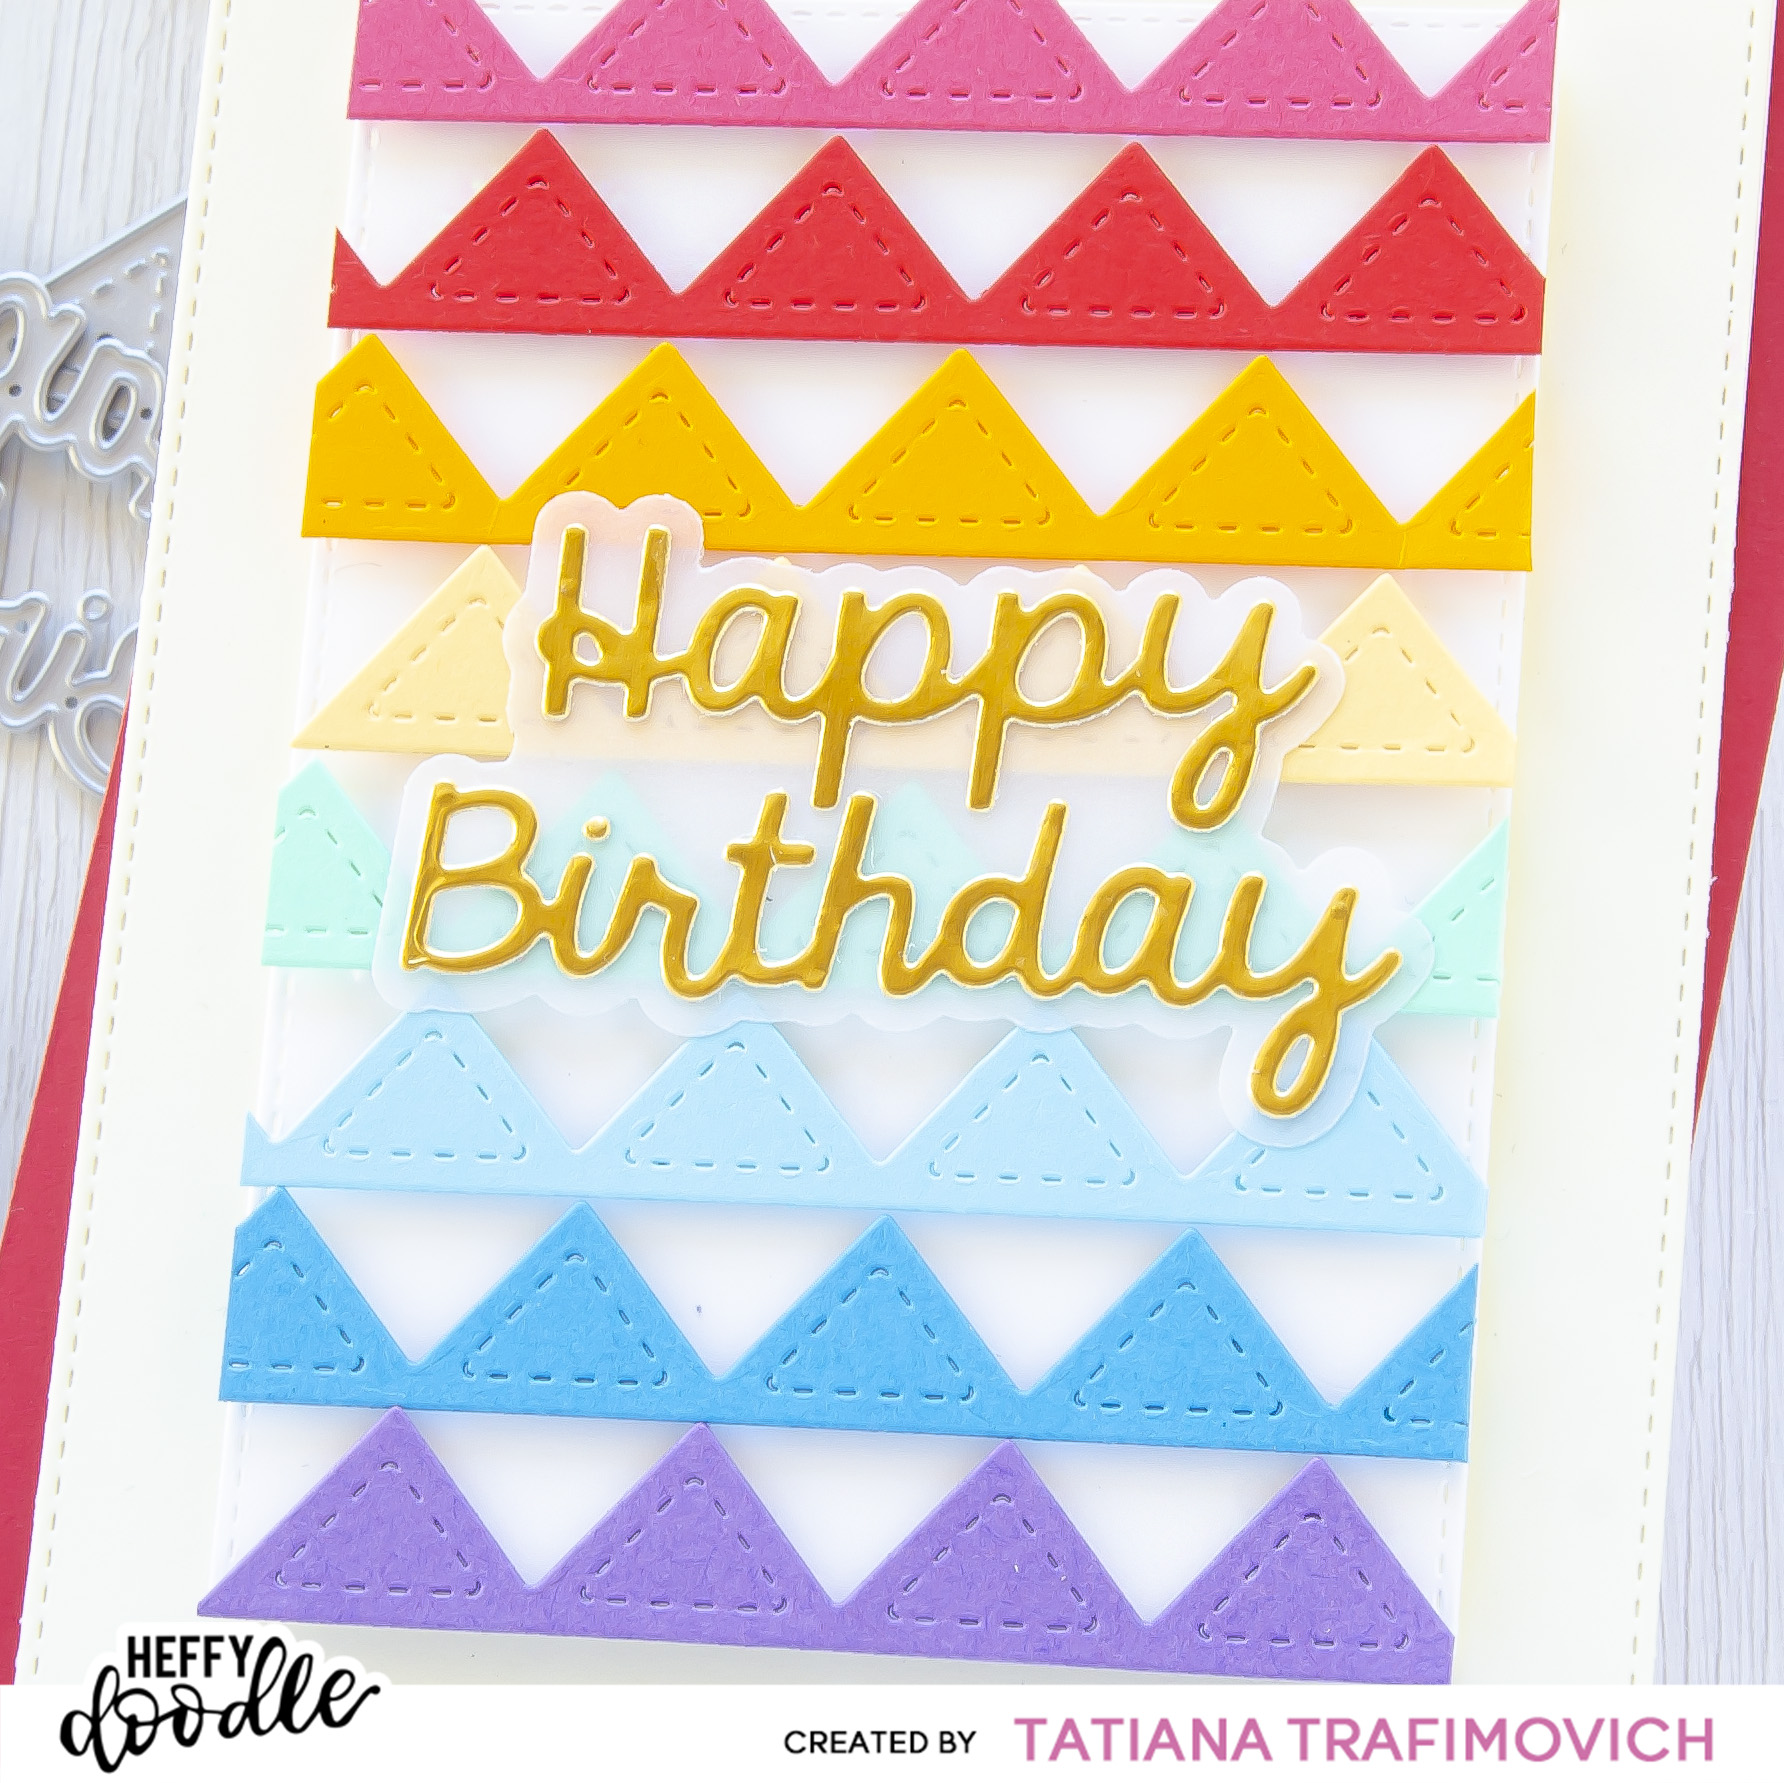 Happy Birthday #handmade card by Tatiana Trafimovich #tatianacraftandart - Zig-A-Zig Ah Chevron Dies by Heffy Doodle #heffydoodle